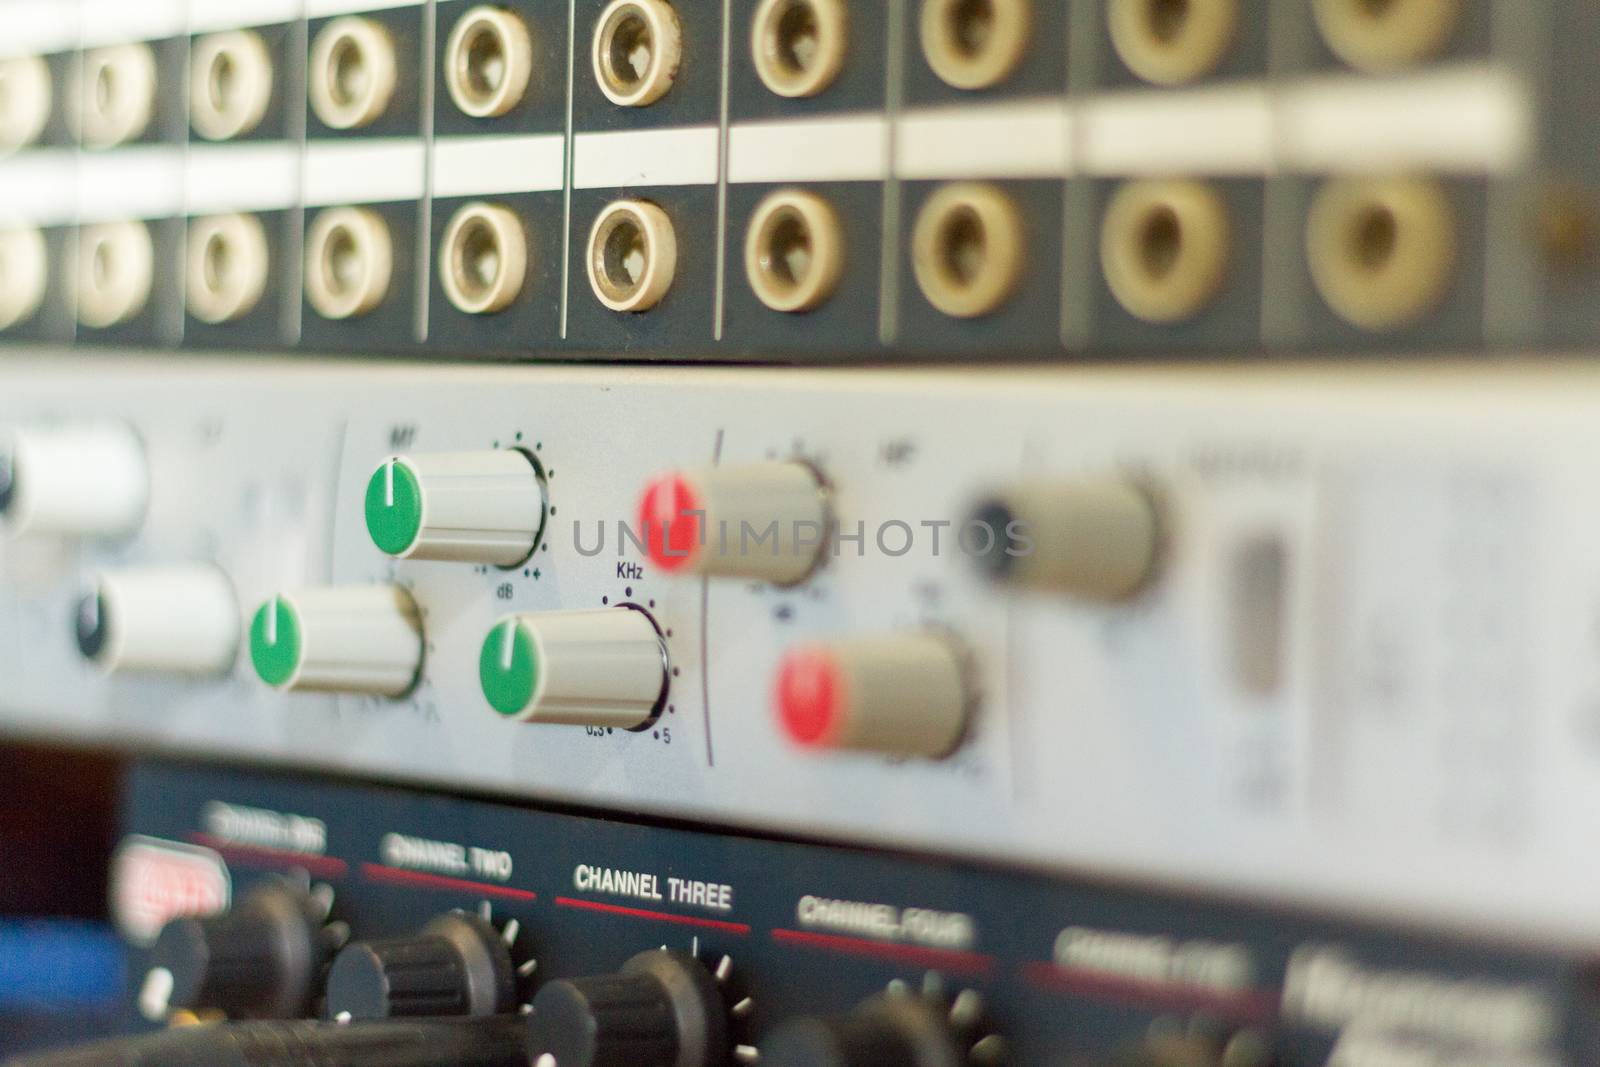 Recoring audio production equipment at a recording studio, close-up